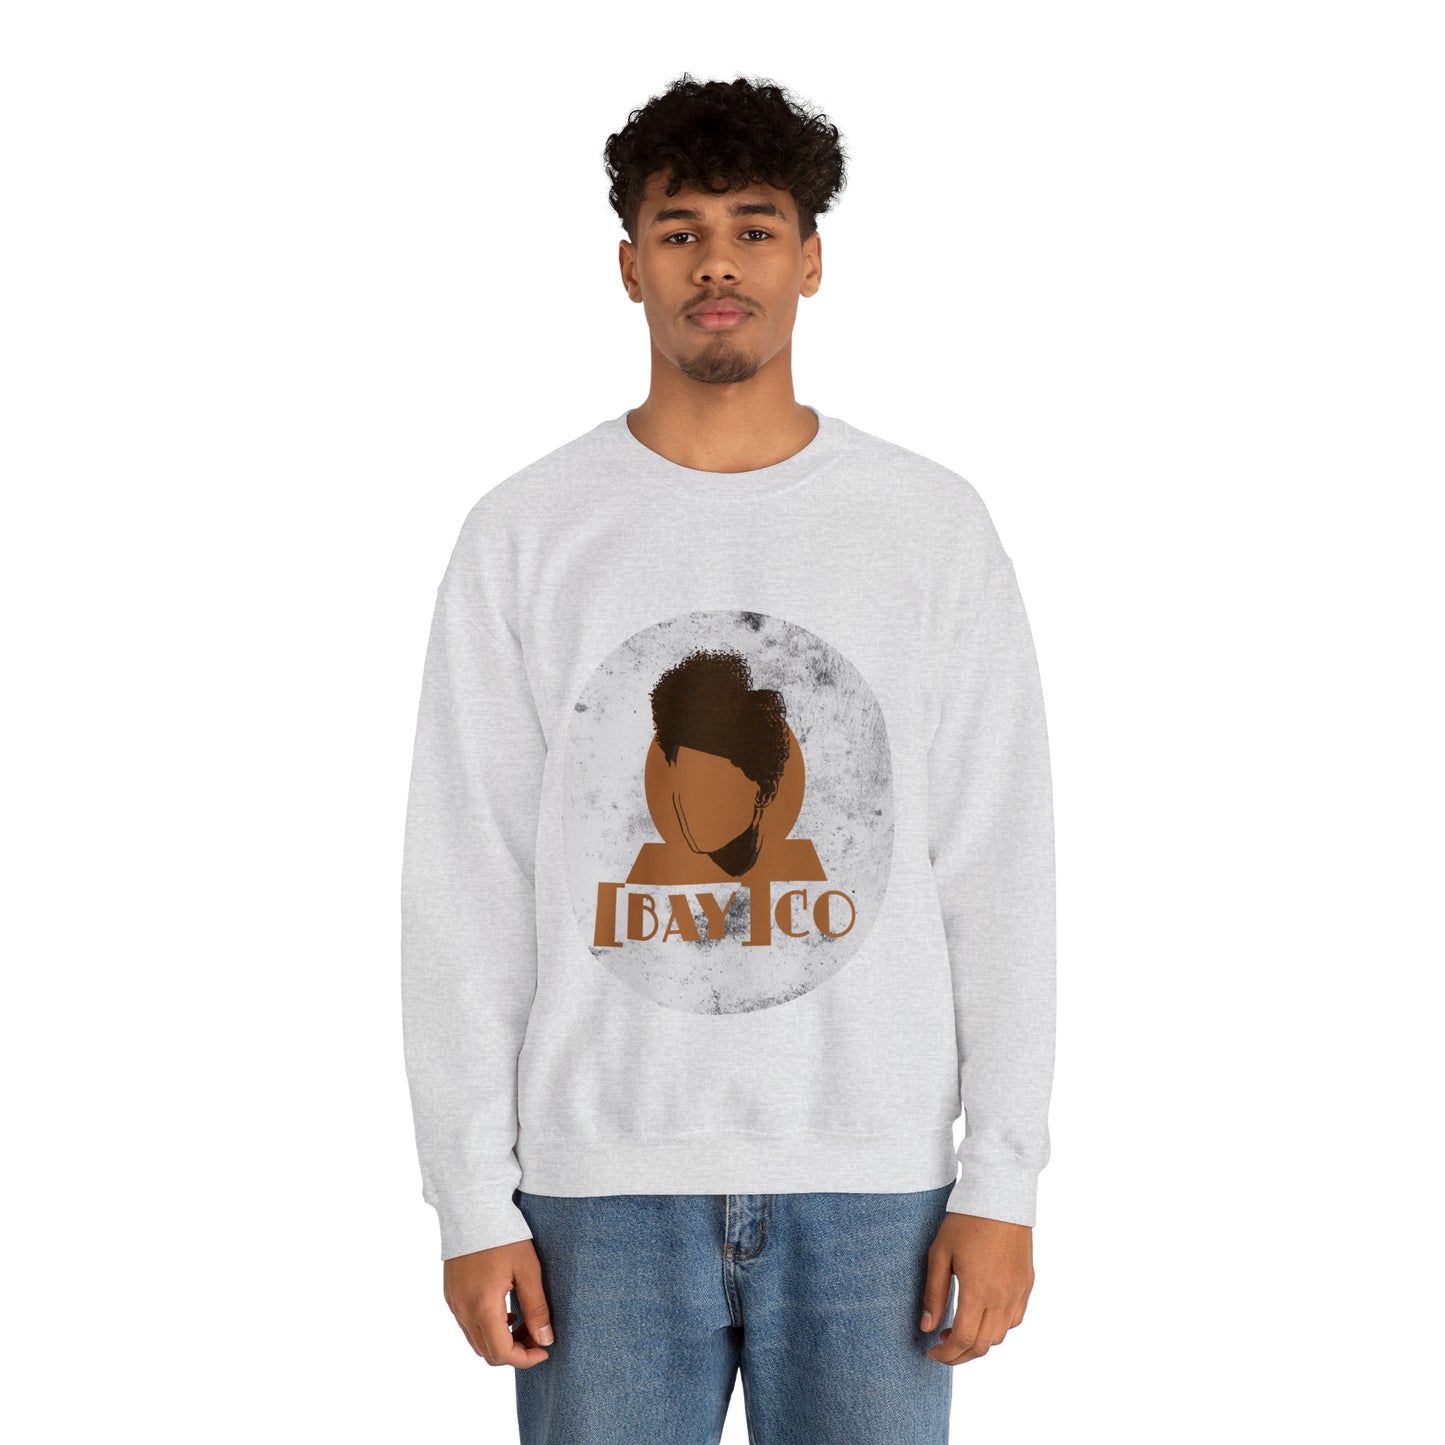 Baeco Brown Sweatshirt